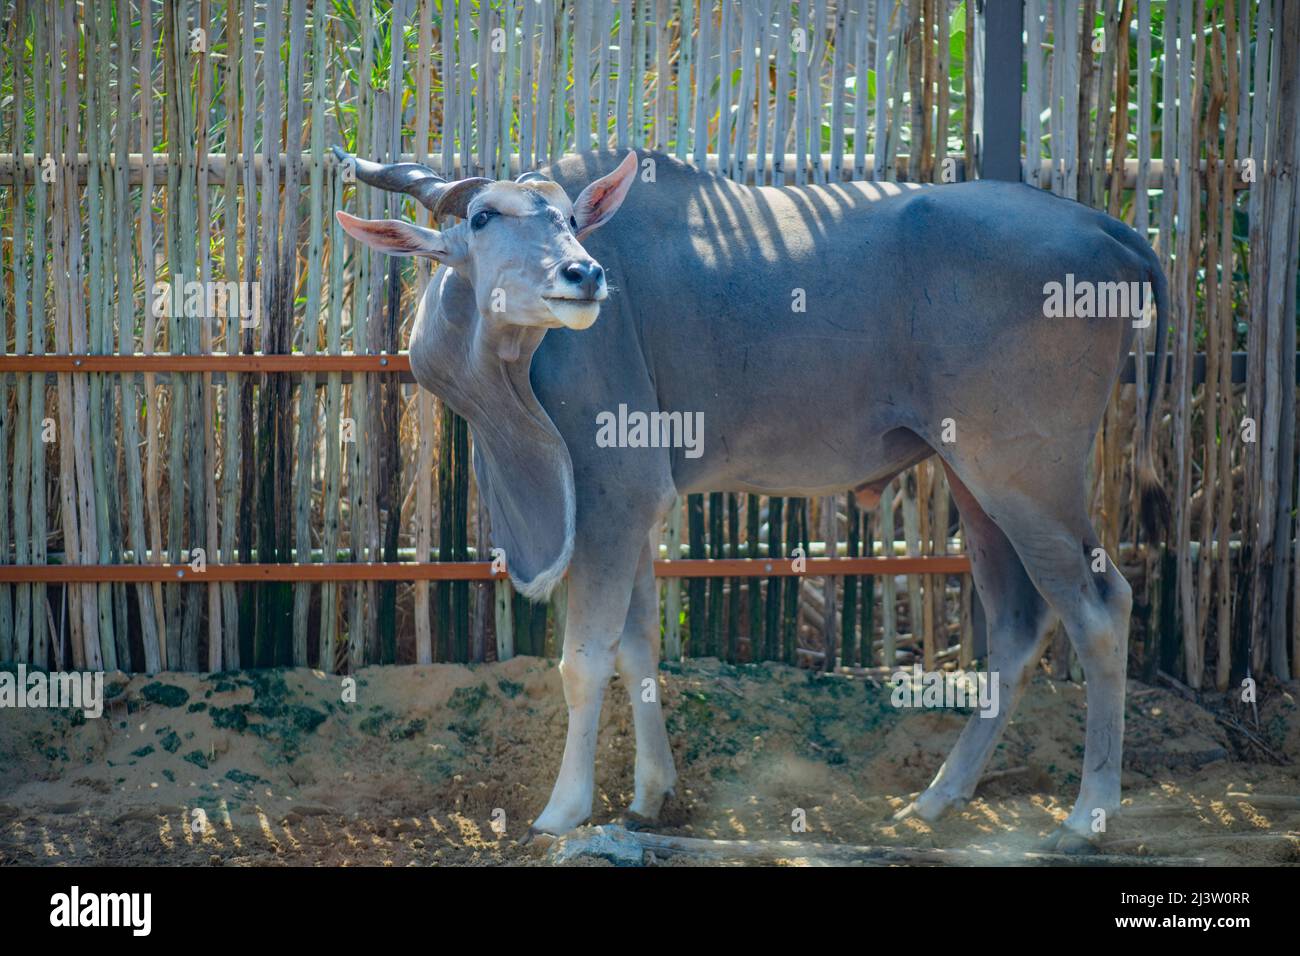 The eland lives in the Dubai Zoo Stock Photo